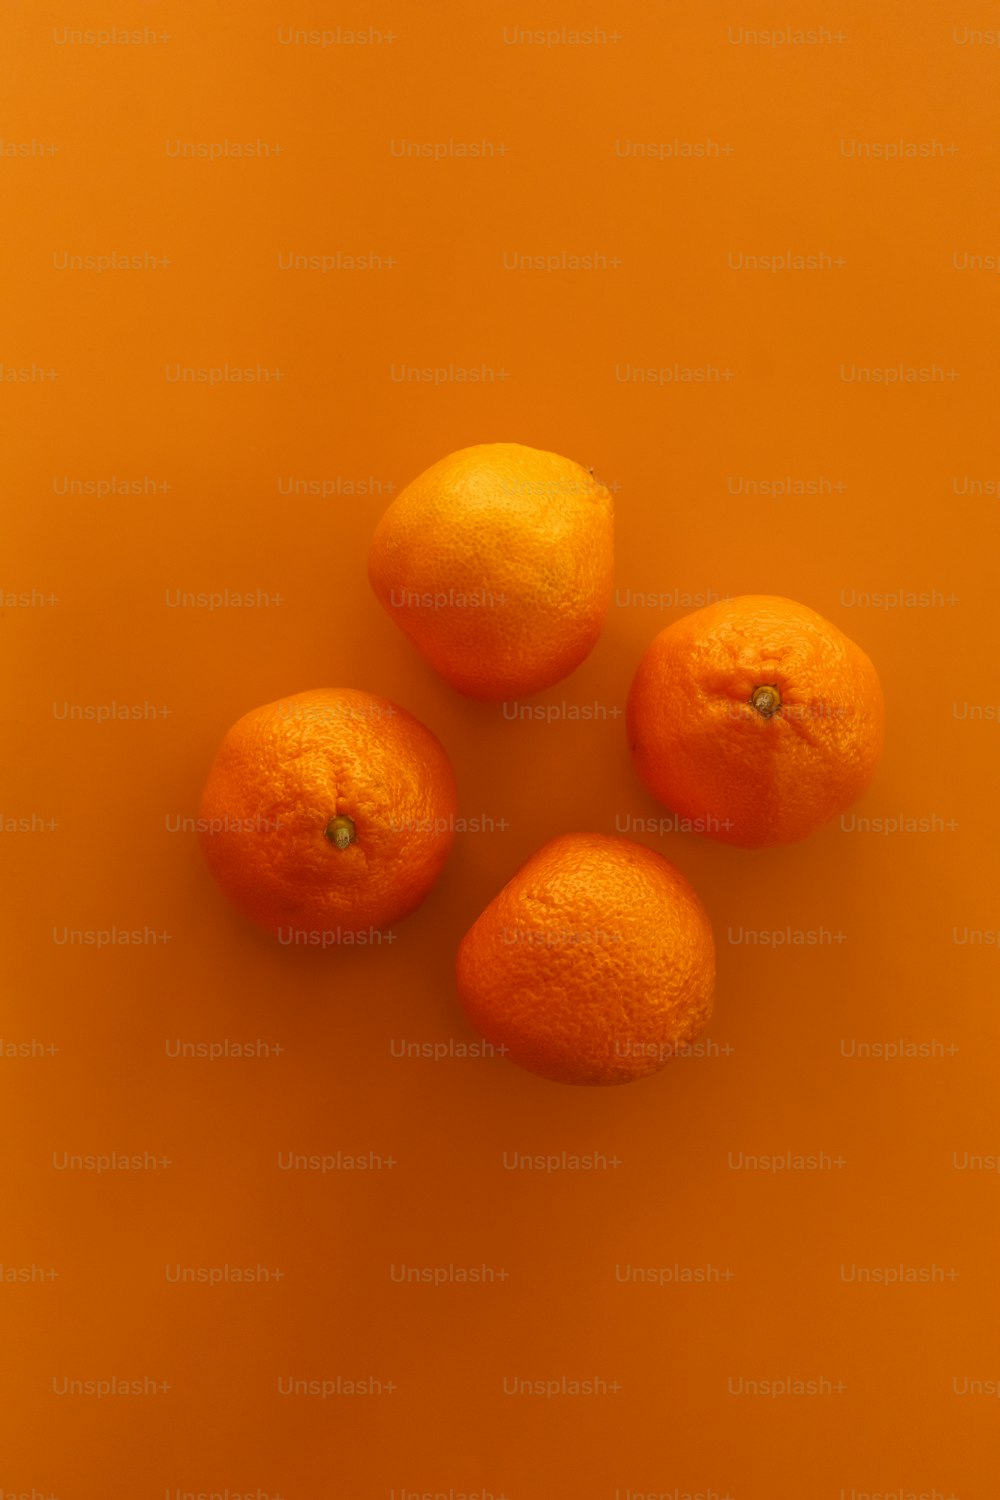 Quattro arance sedute sopra una superficie arancione